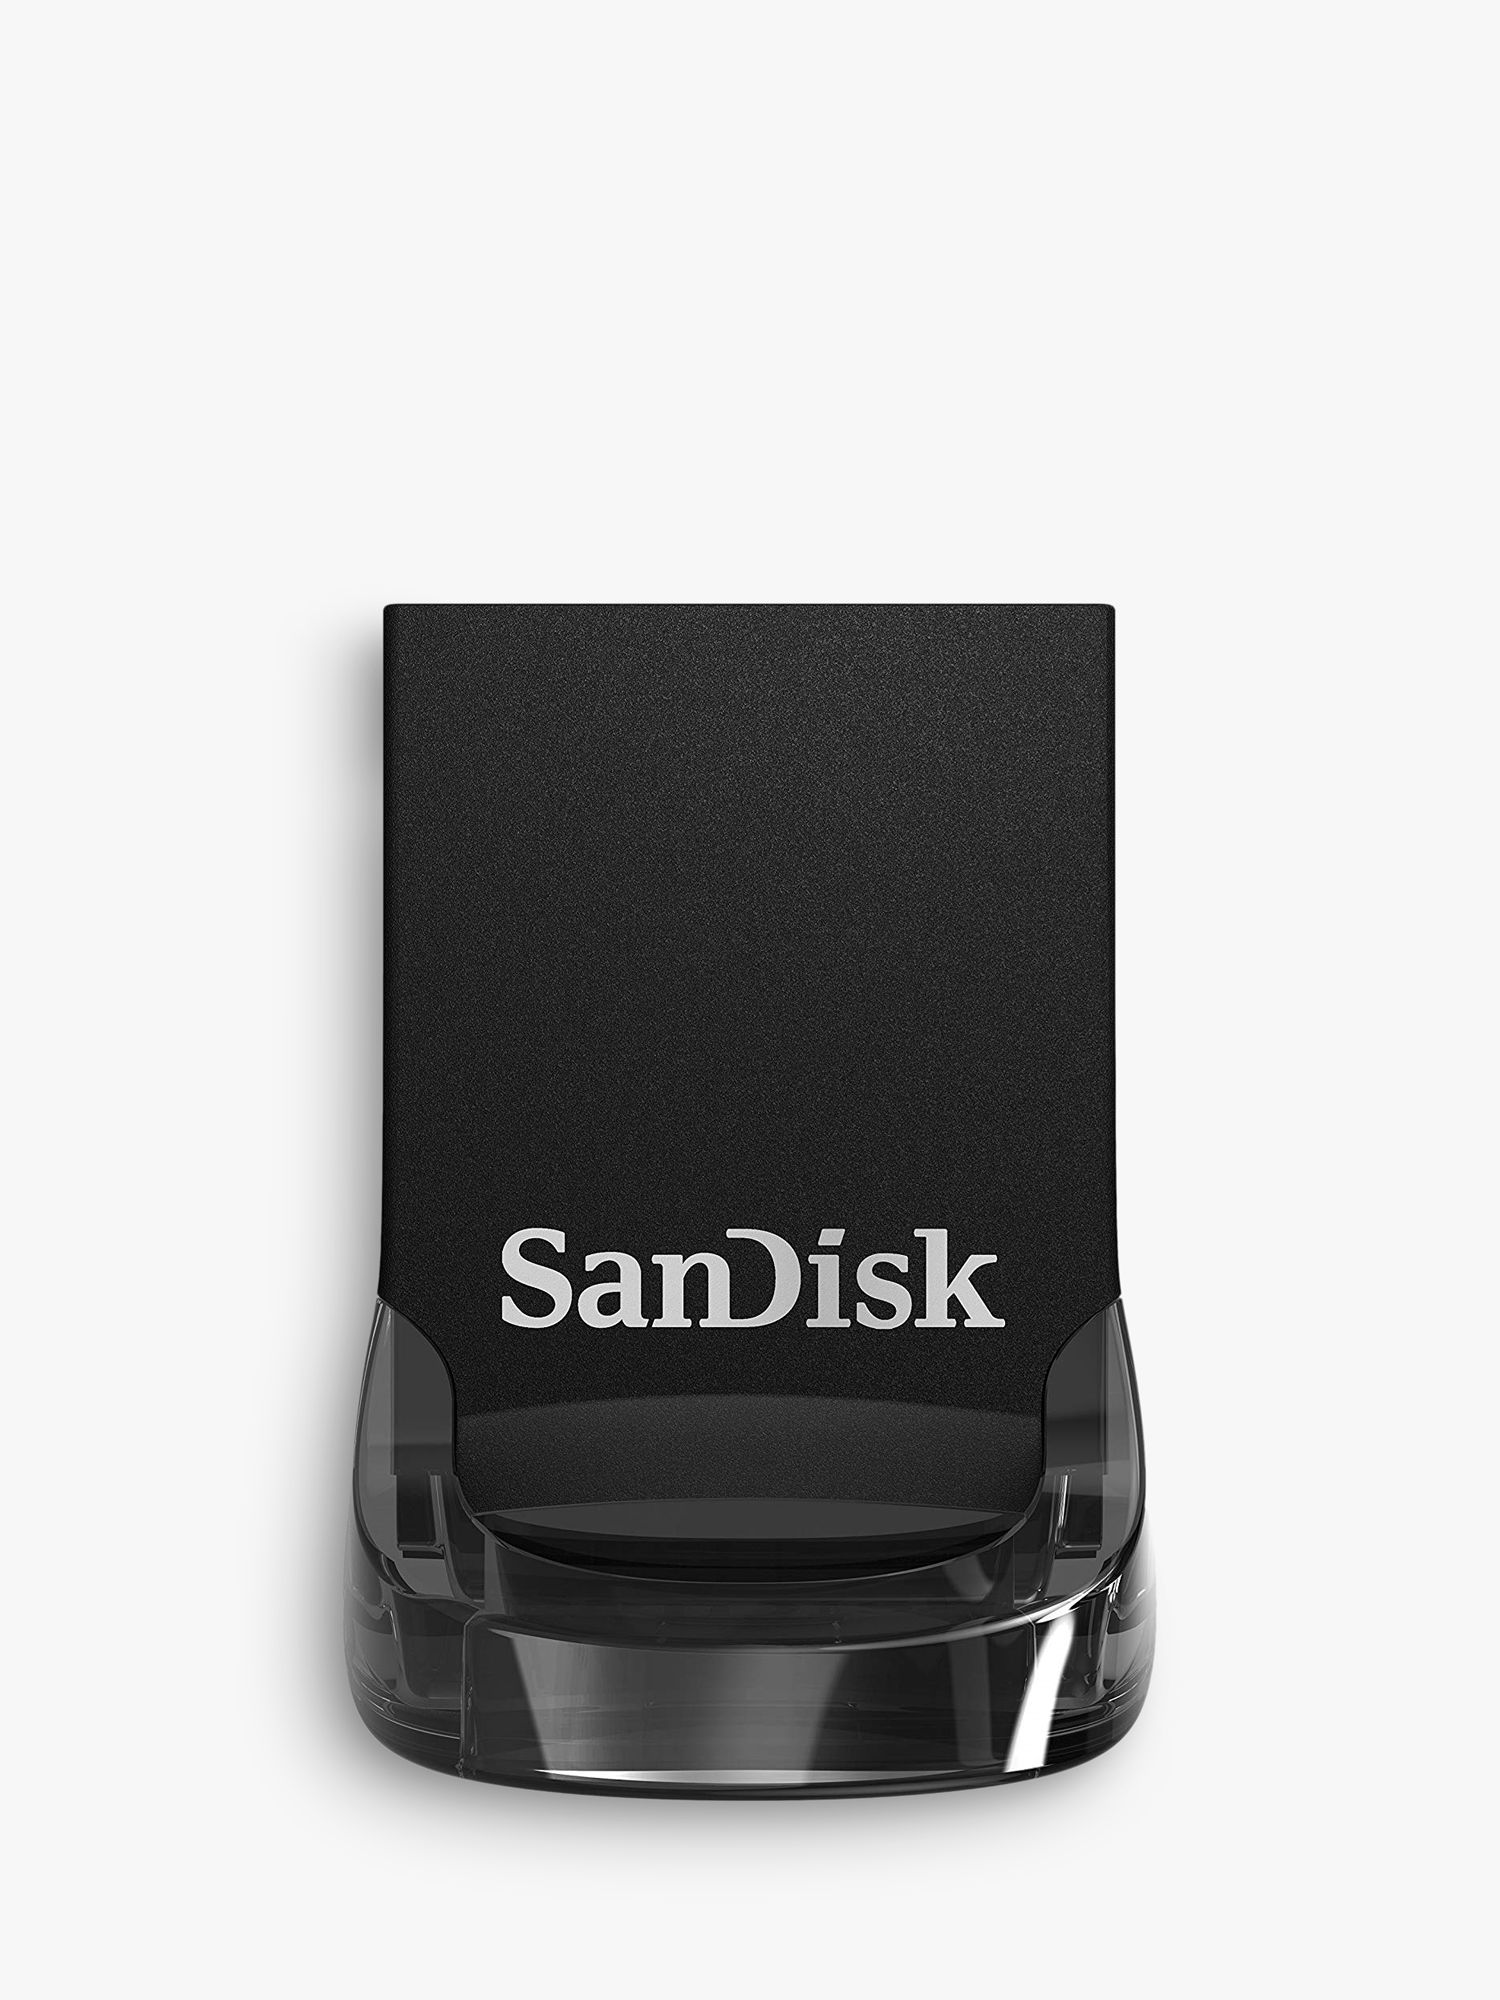 SanDisk Ultra Fit USB 3.1 Portable Drive, 128GB